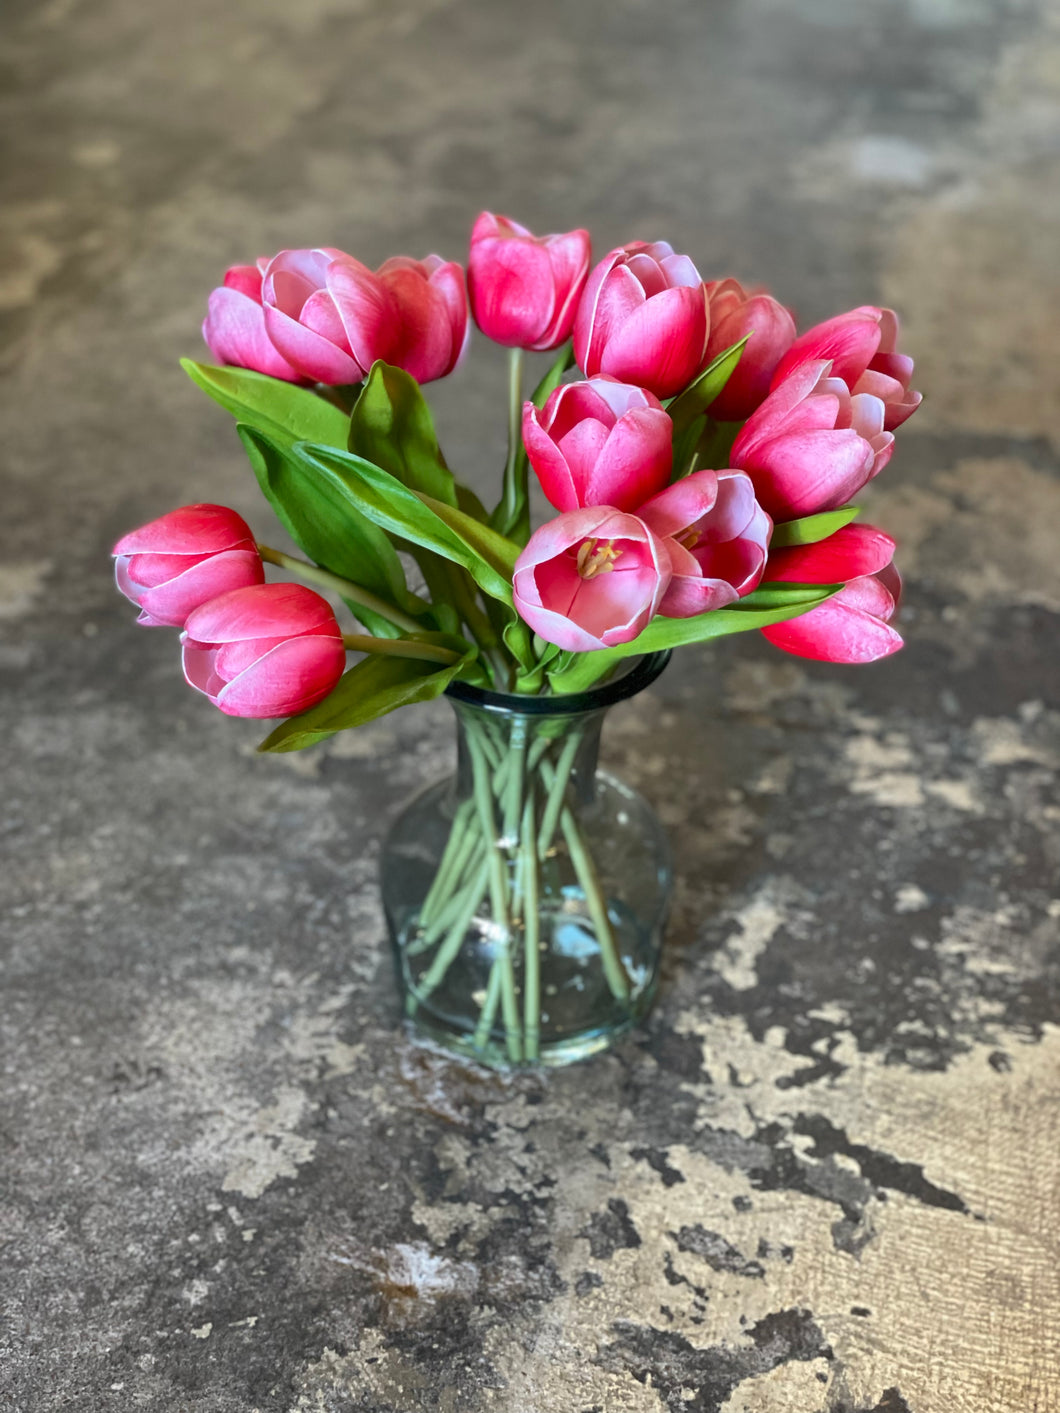 Pink Tulips in Vase